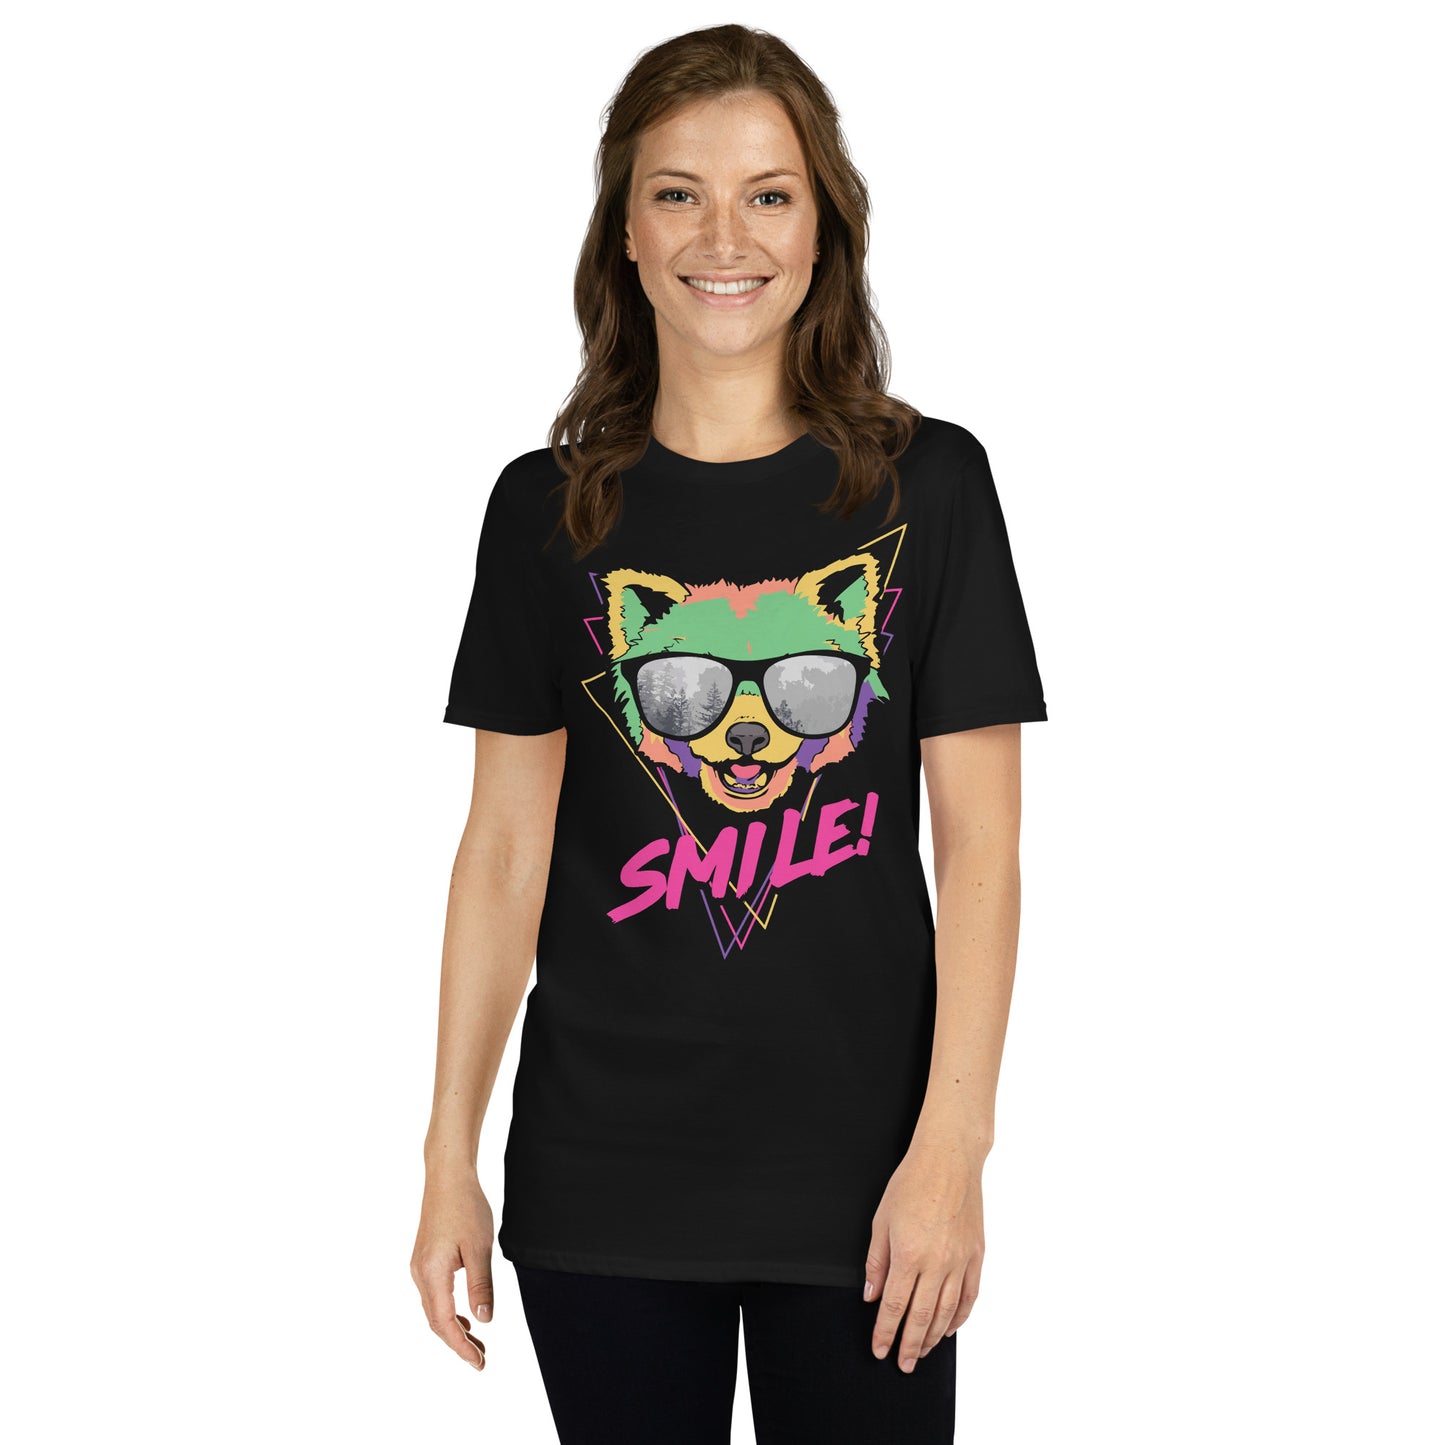 Retro Red Panda with Sunglasses - Smile! T-shirt